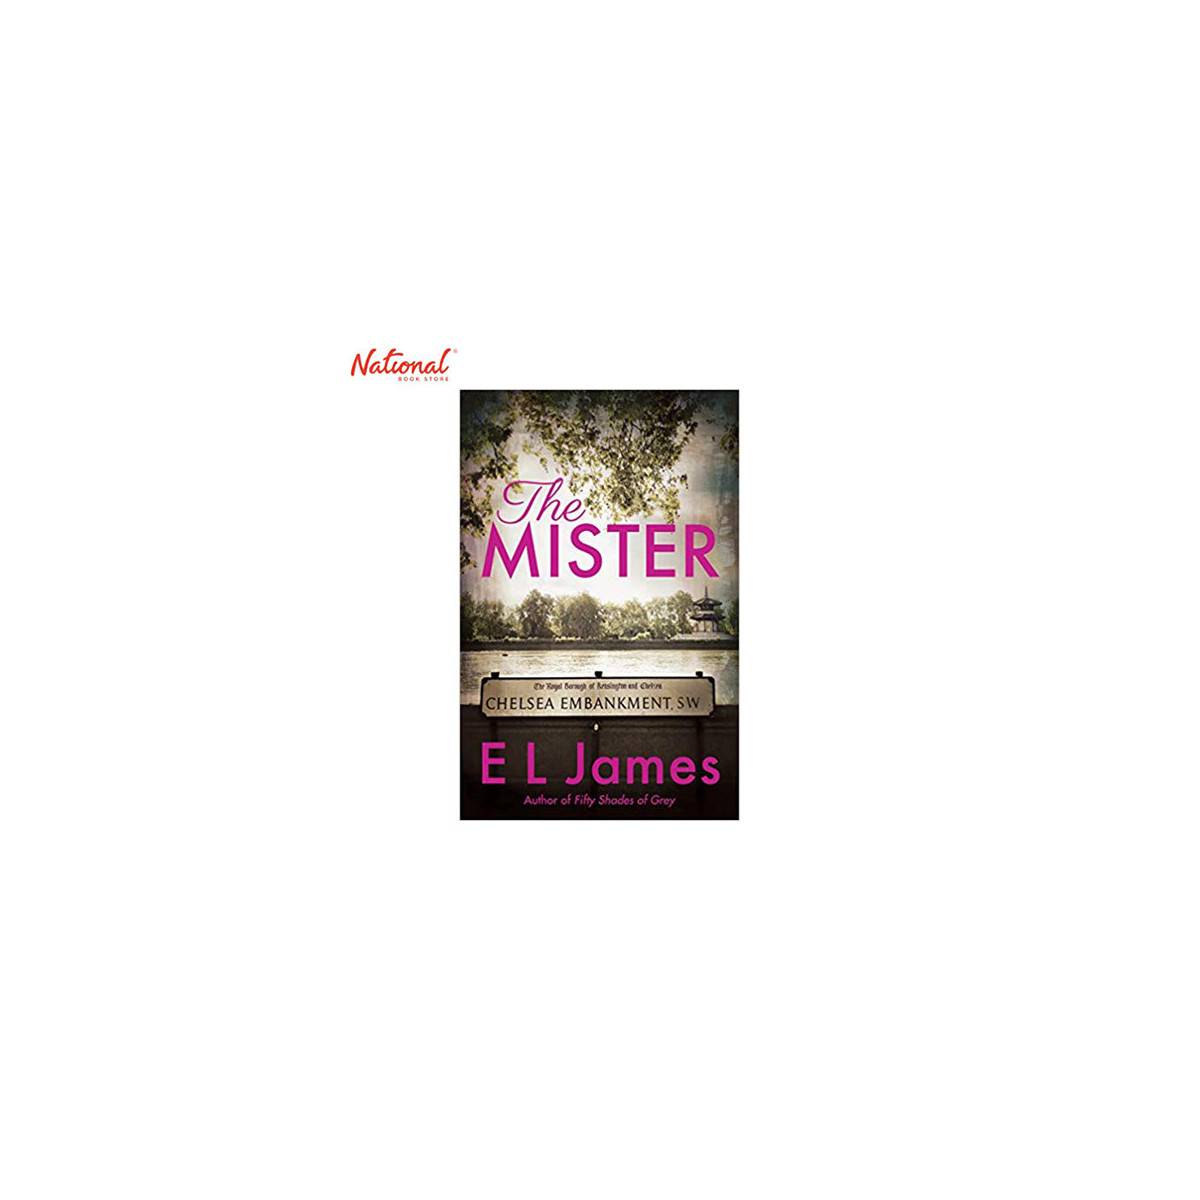 THE MISTER TRADEPAPER BY EL JAMES